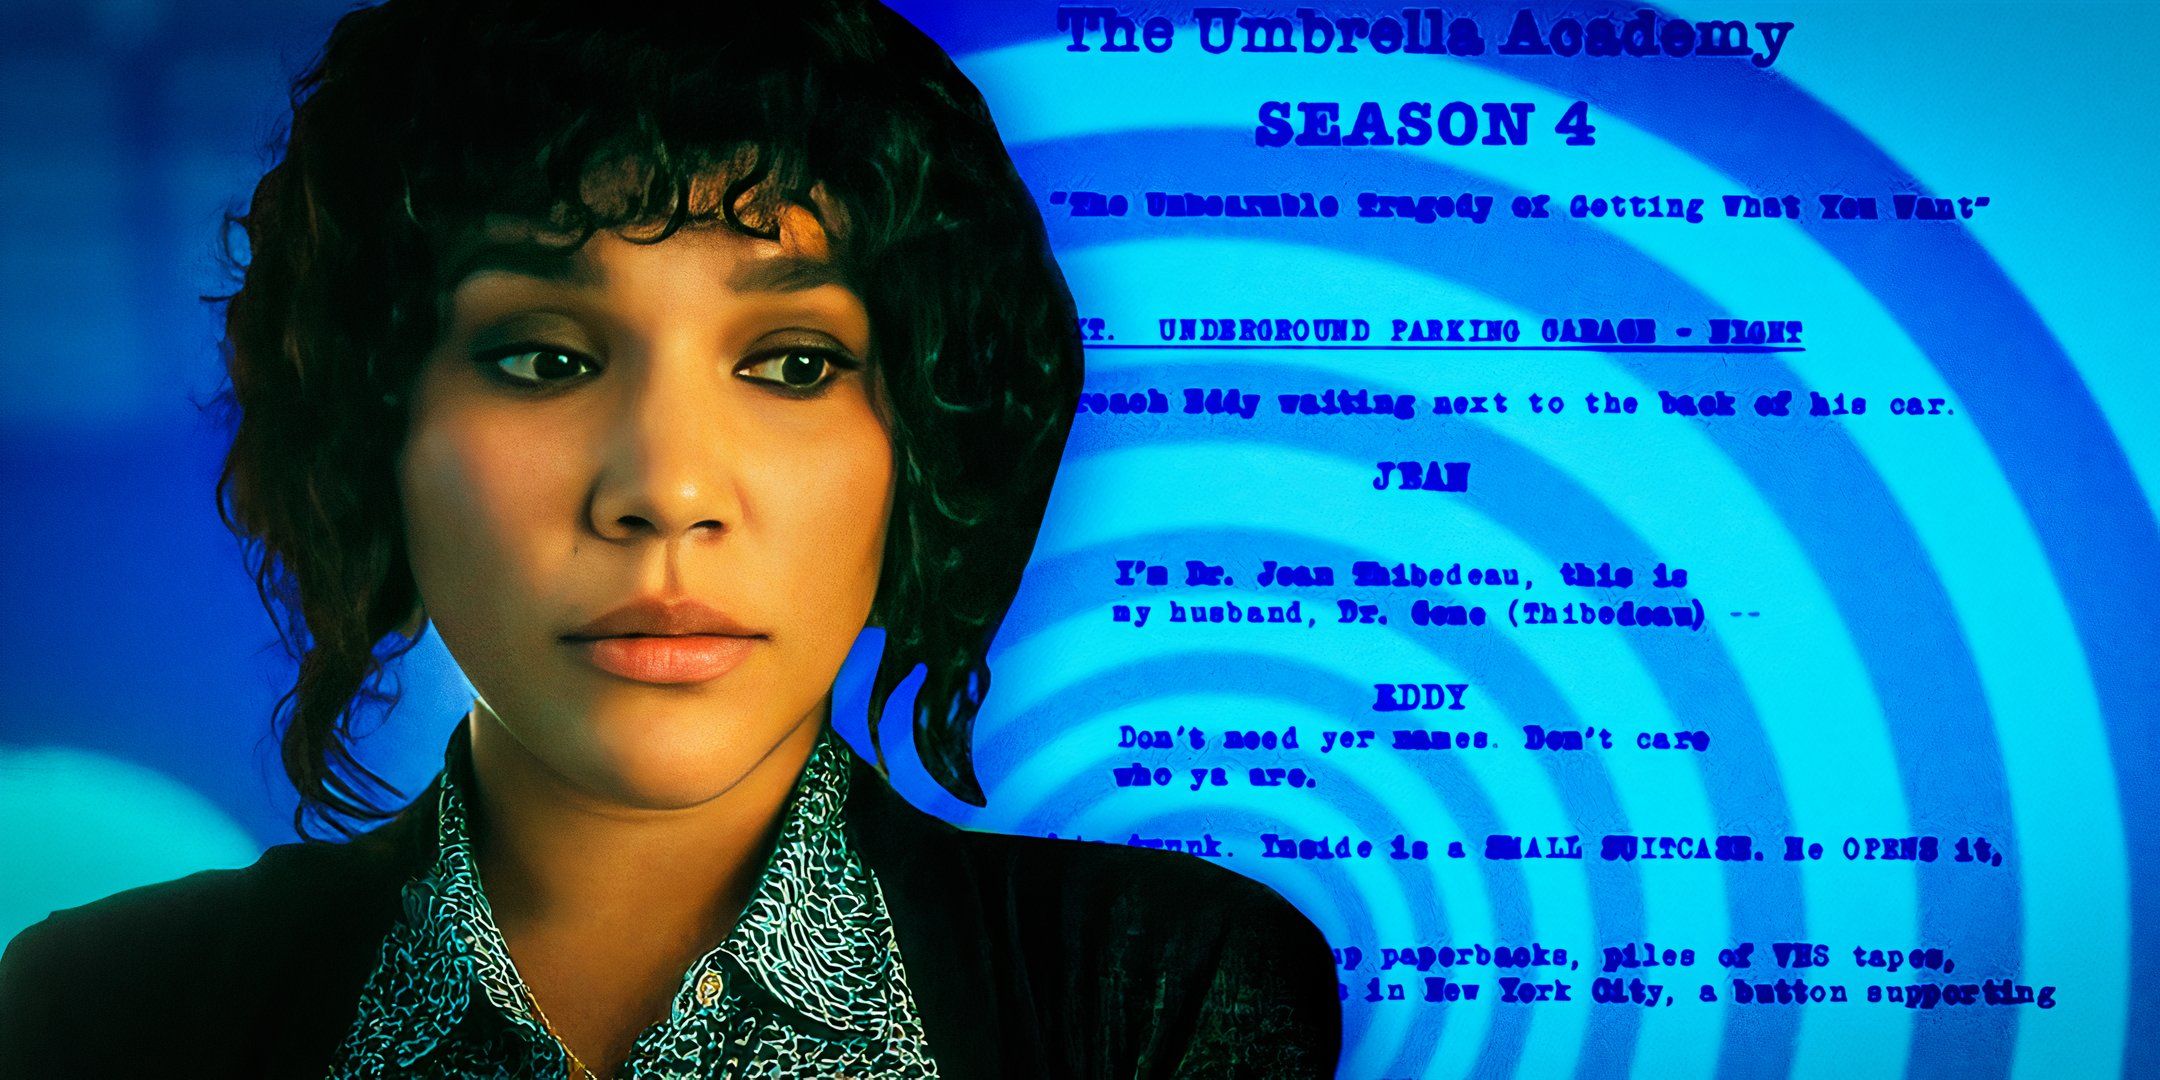 The Umbrella Academy Allison next to season 4's script page